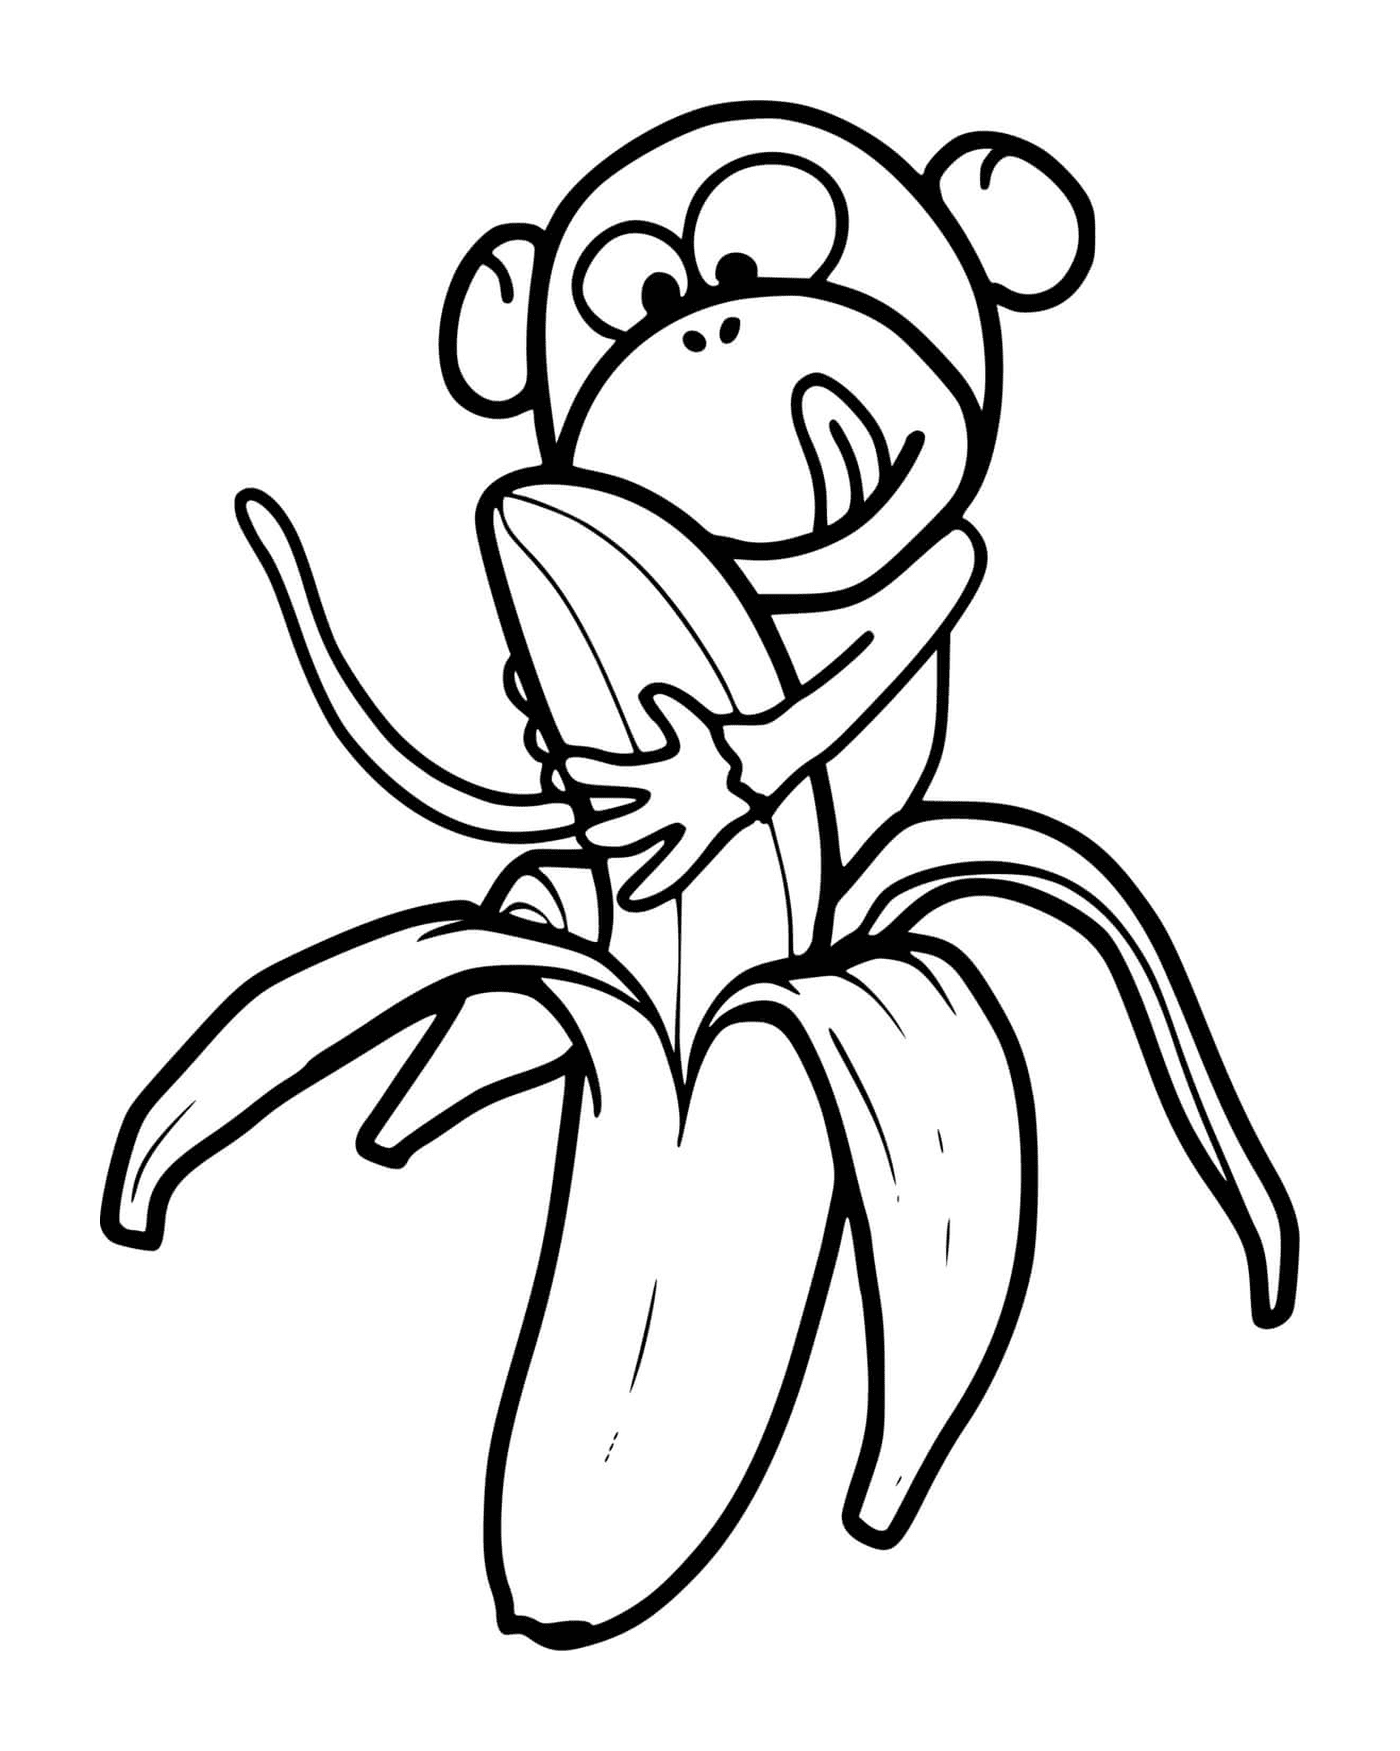  Обезьяна ест банан 